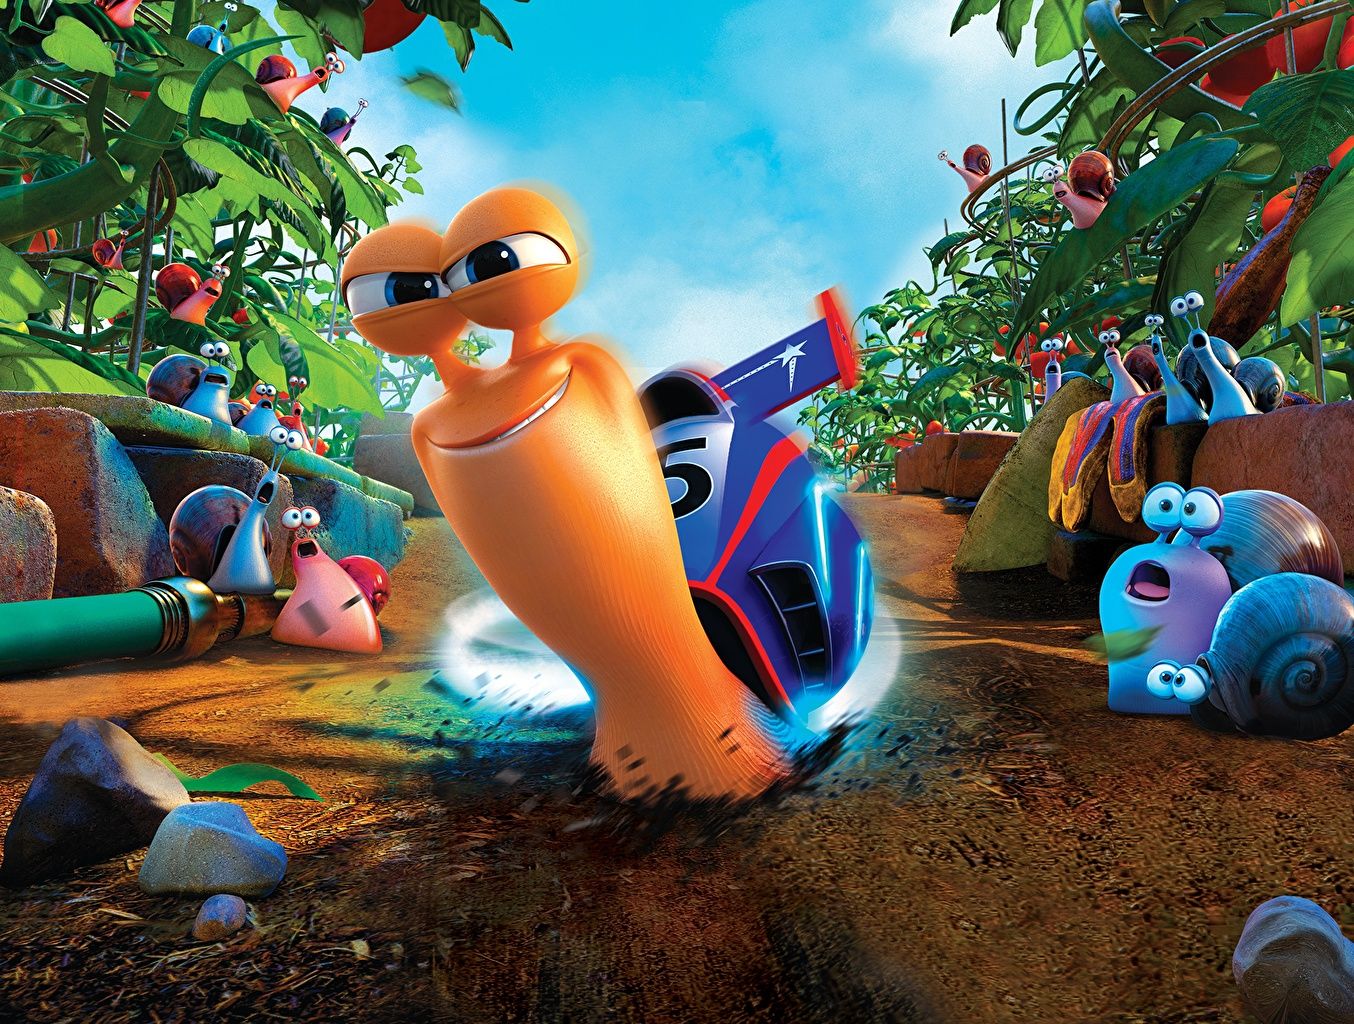 Image Turbo (film) Snails Cartoons